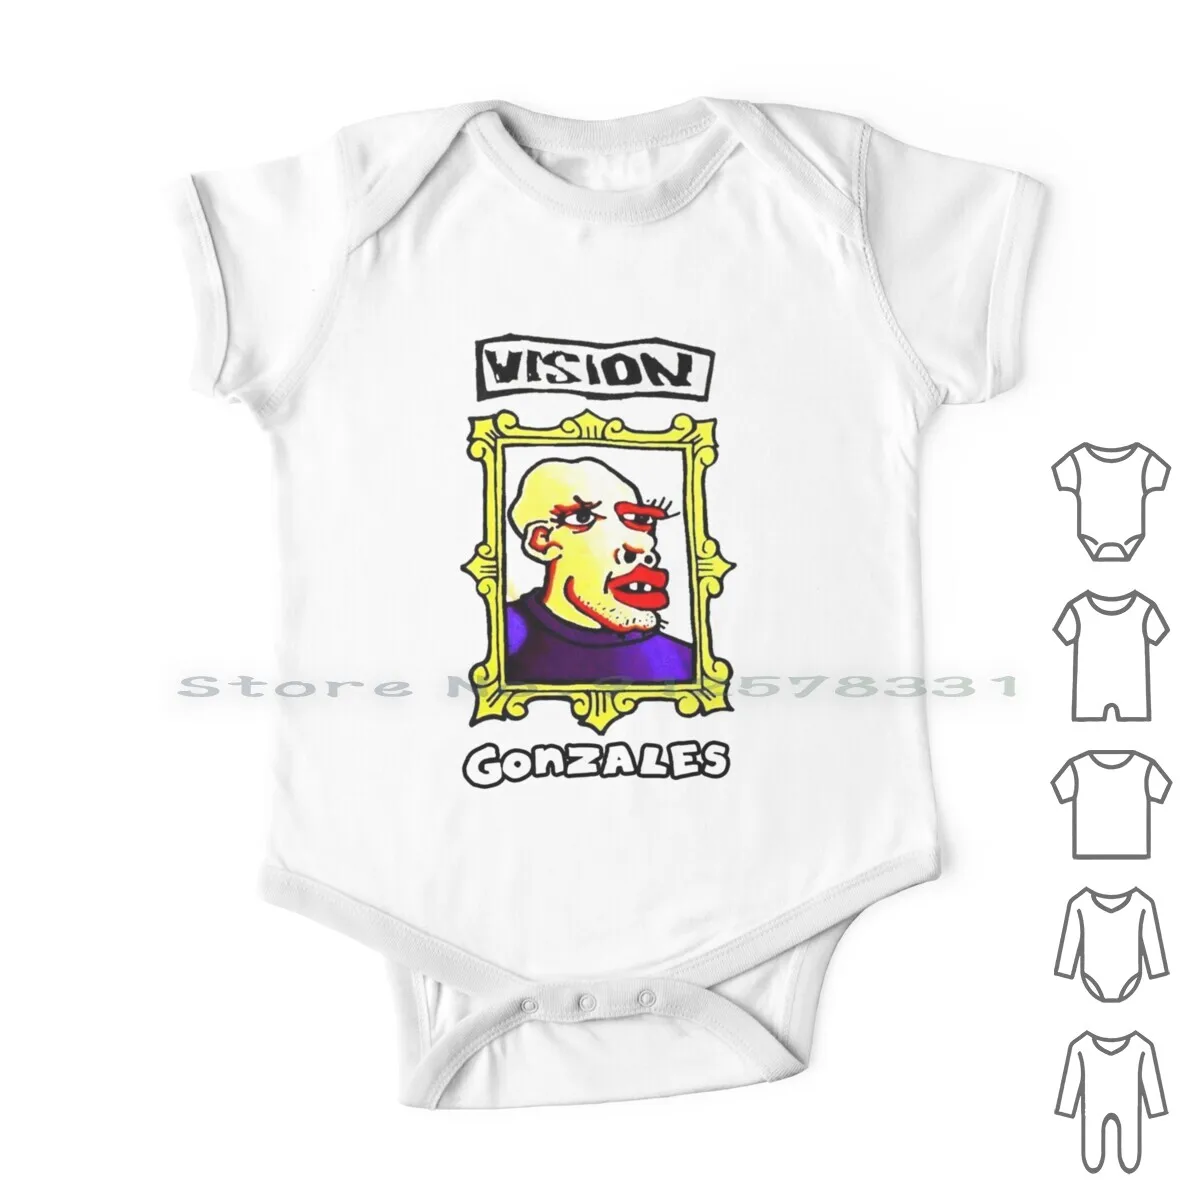 S Mark Gonzales Newborn Baby Clothes Rompers Cotton Jumpsuit